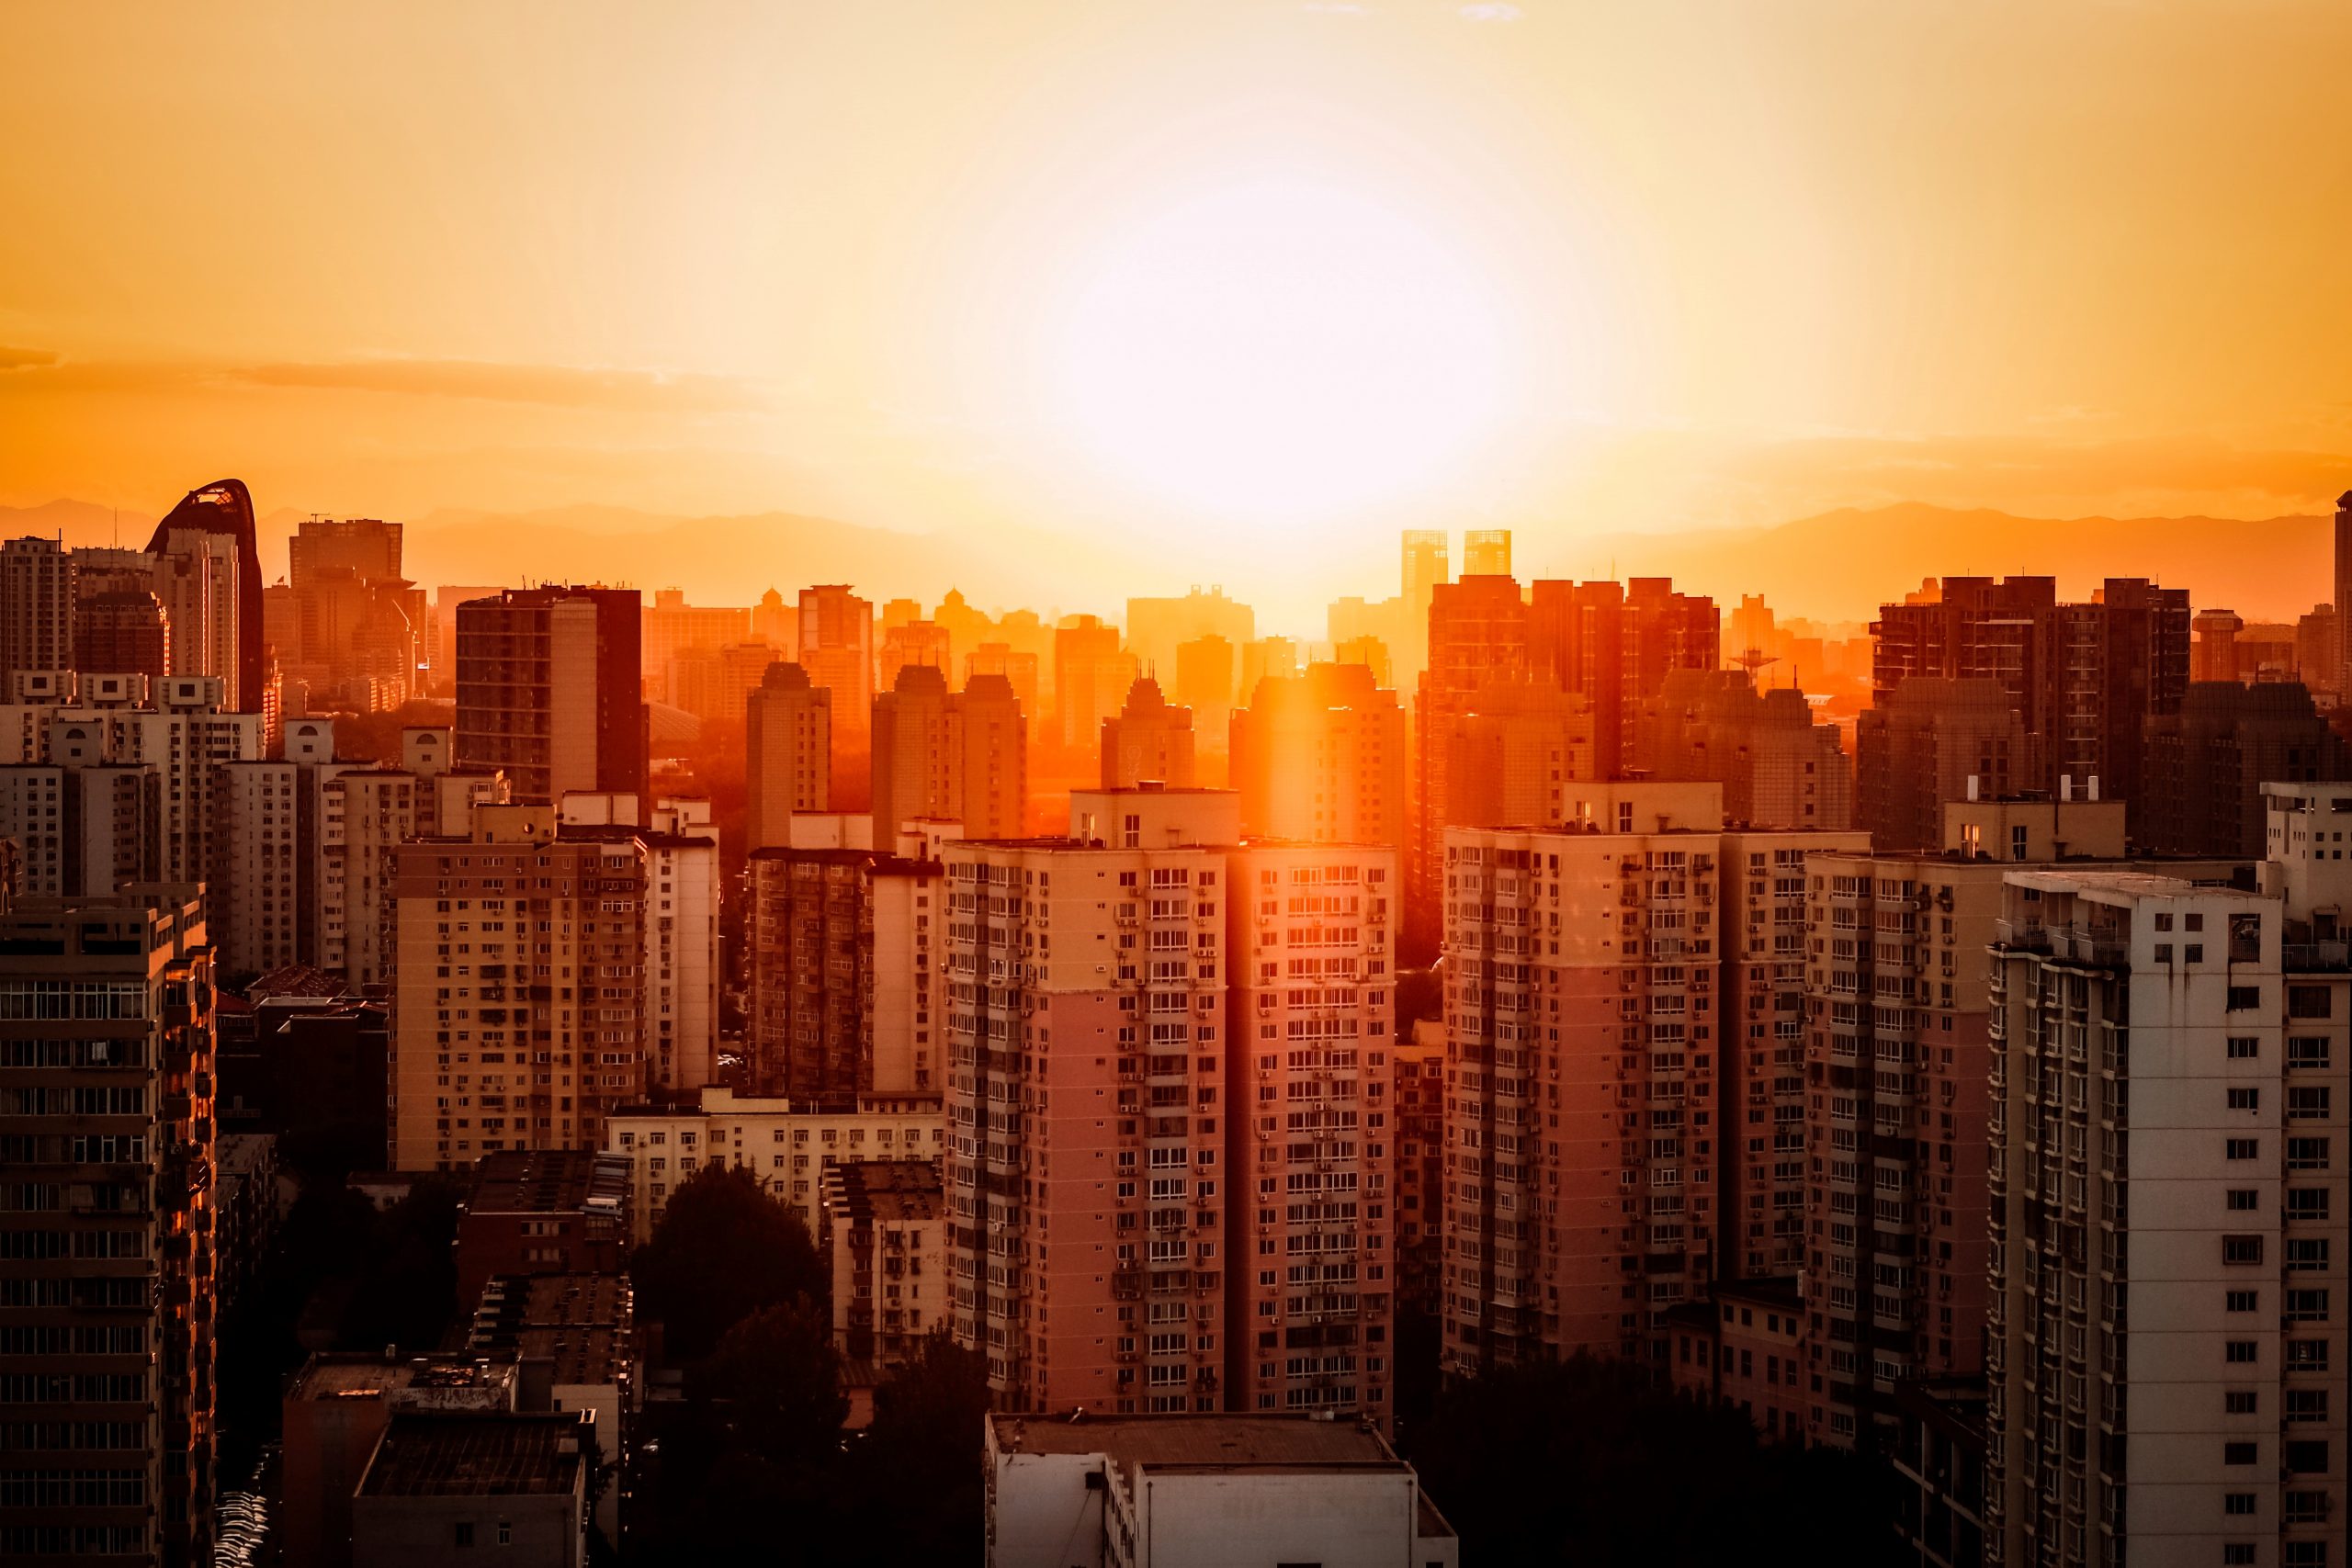 City Buildings Illuminated with blazing sunshine